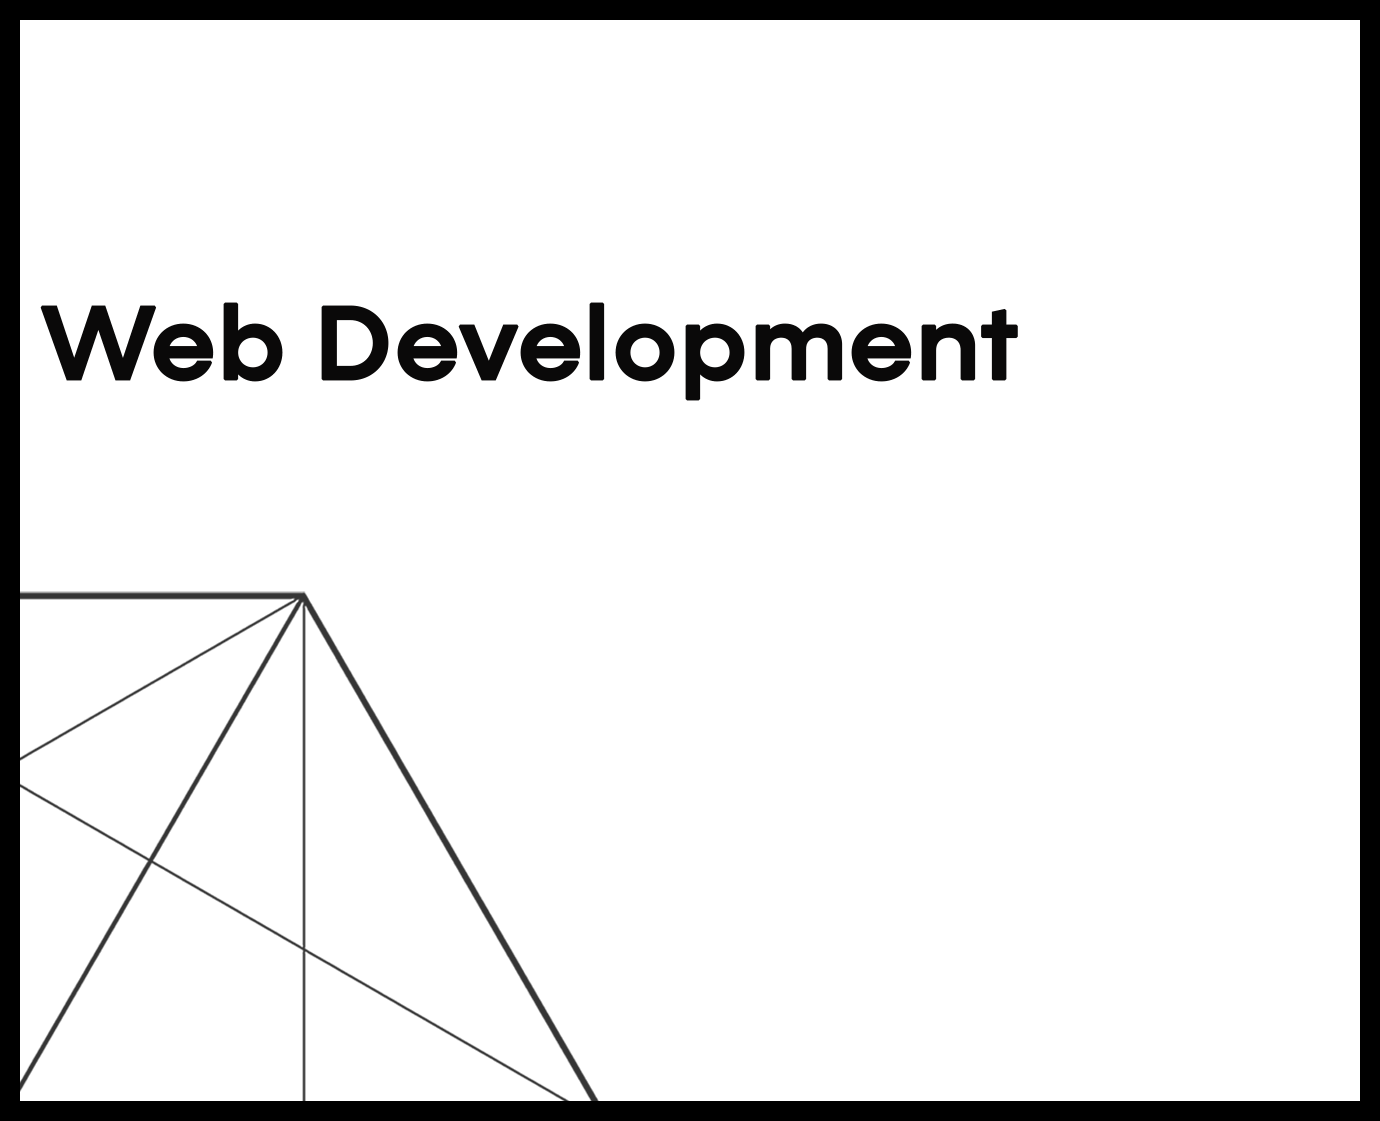 Web Development by Corellage marketing agency